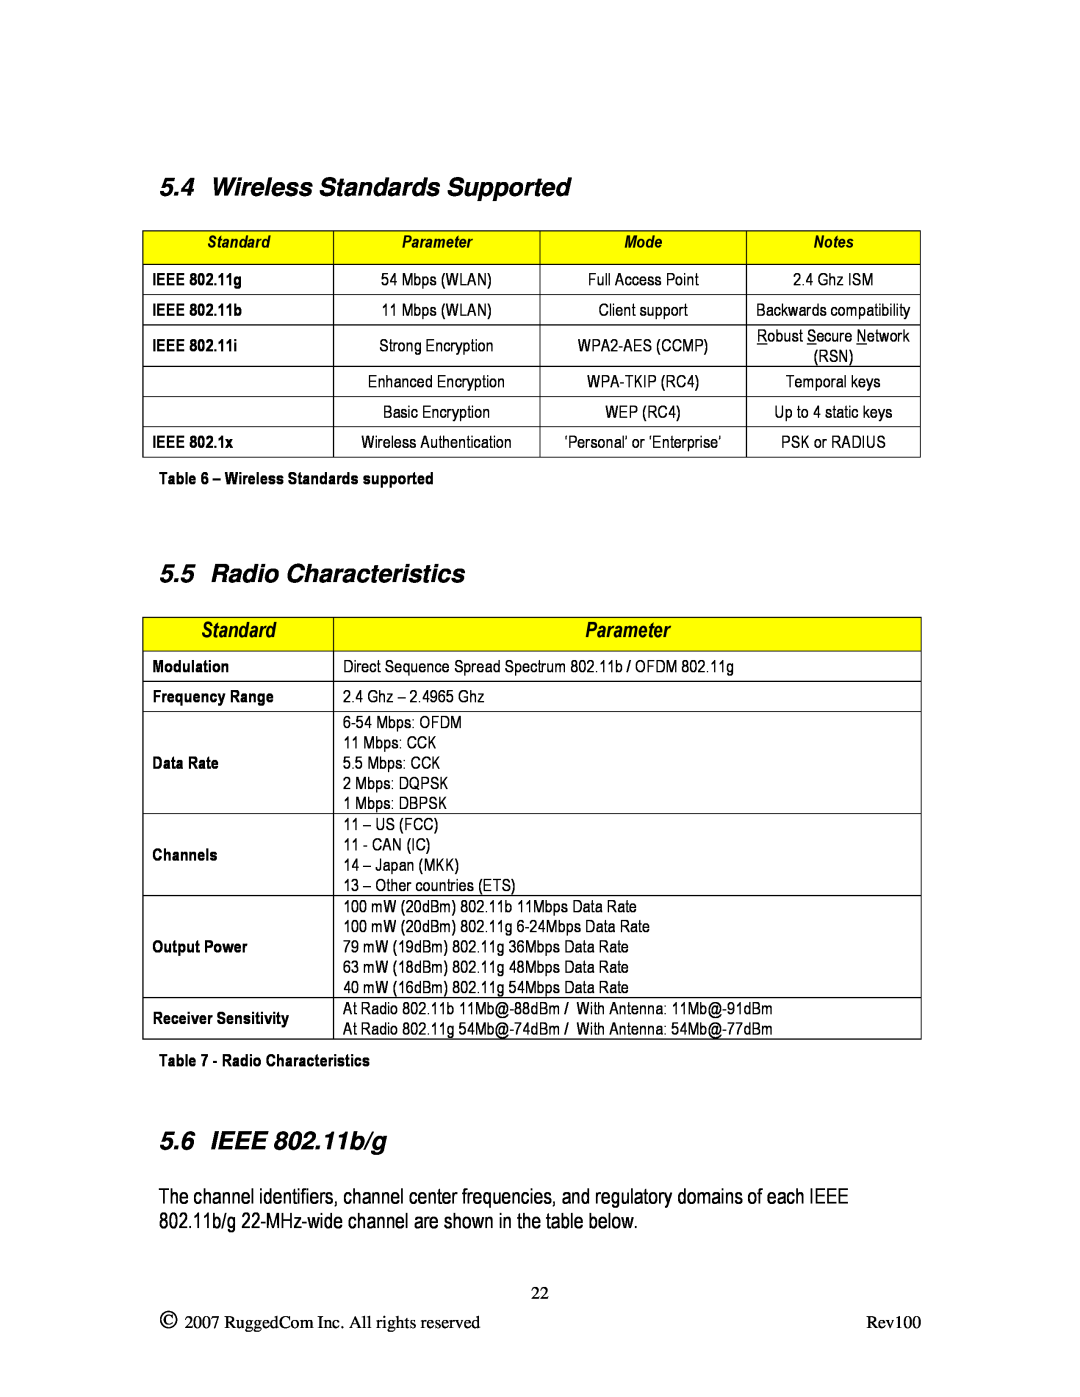 RuggedCom RS910W manual Wireless Standards Supported, Radio Characteristics, IEEE 802.11b/g, Parameter 